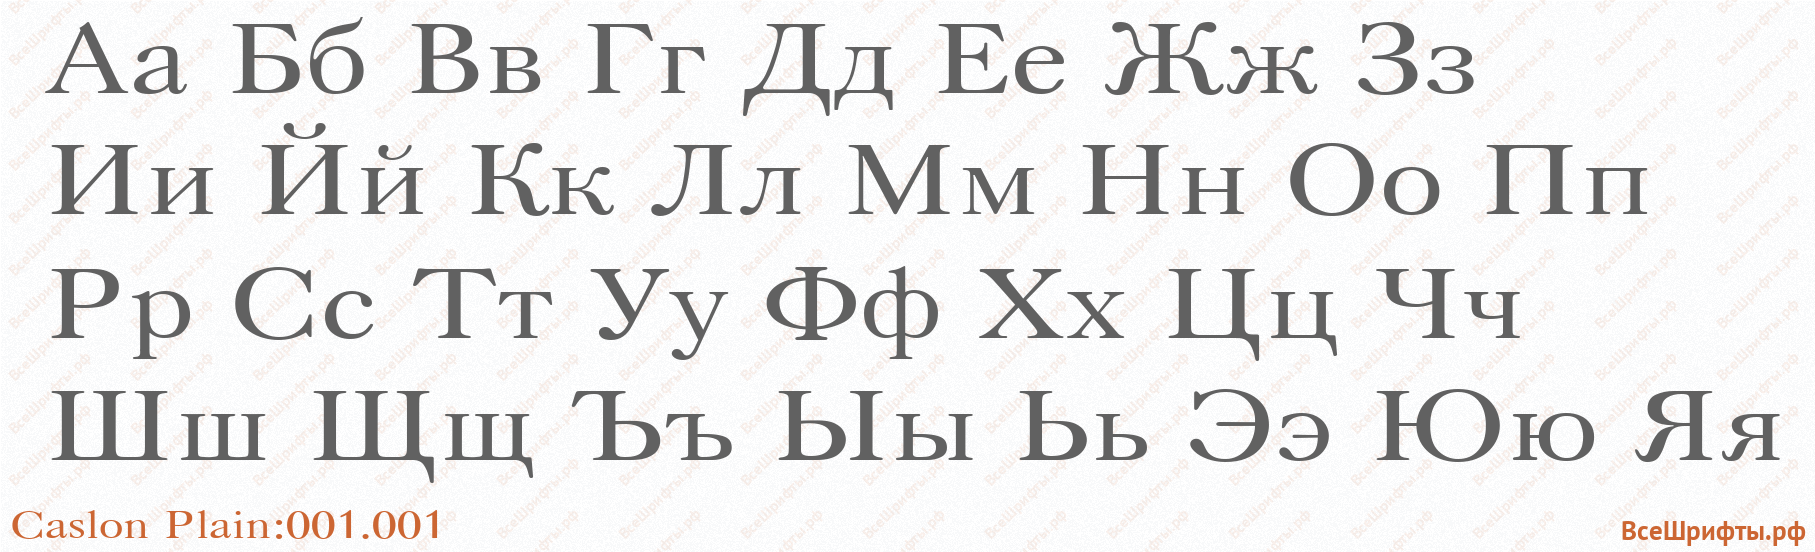 Шрифт Caslon Plain:001.001 с русскими буквами